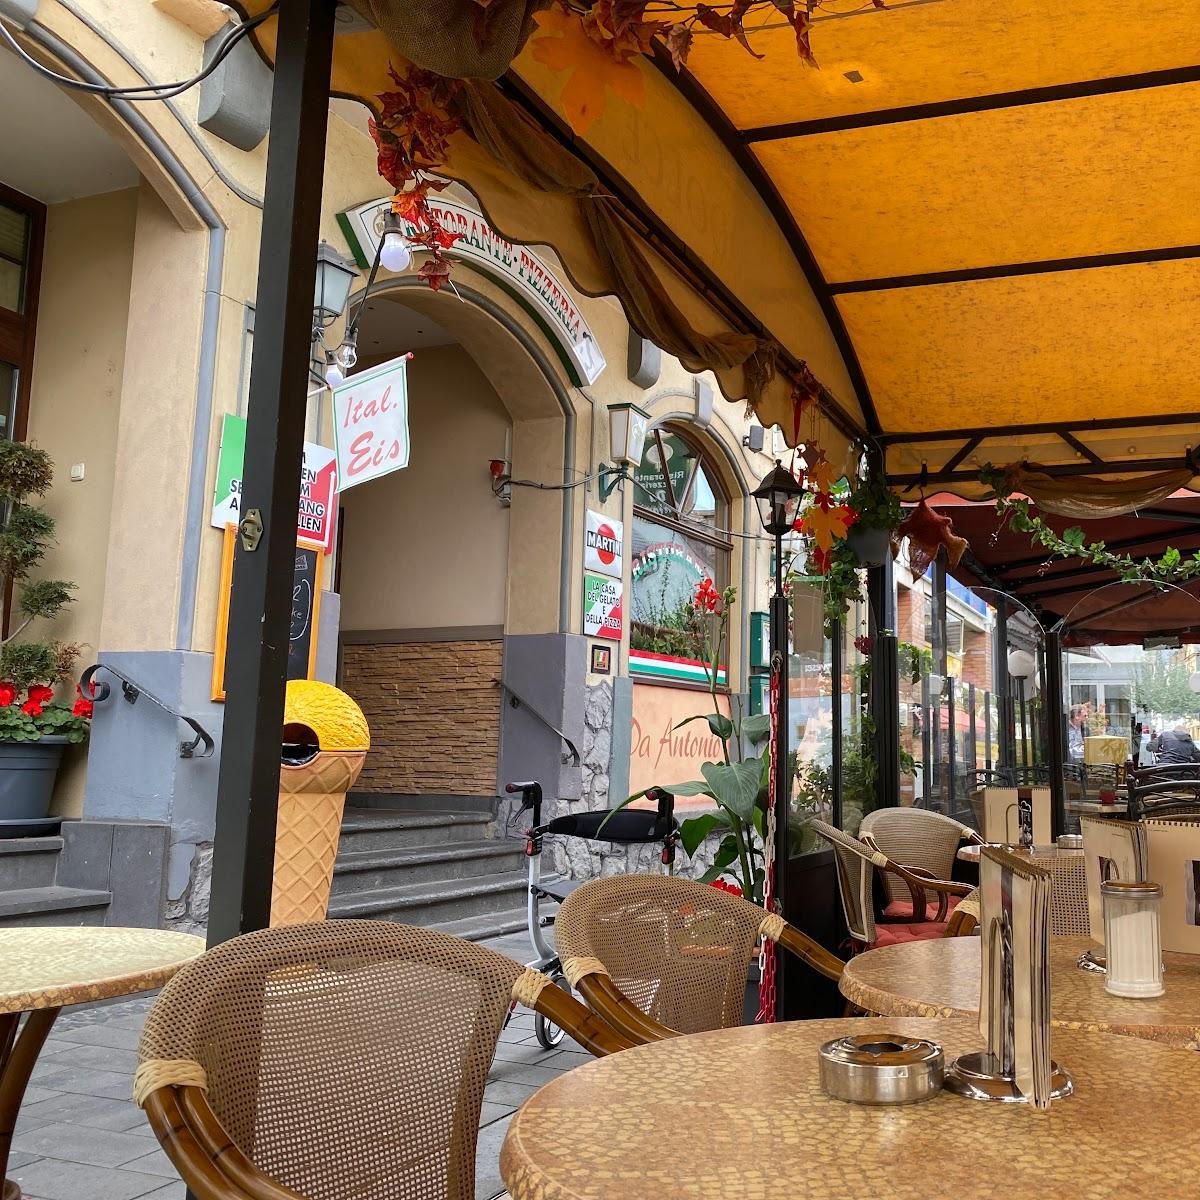 Restaurant "Eiscafé La Dolce Vita" in Oberwesel